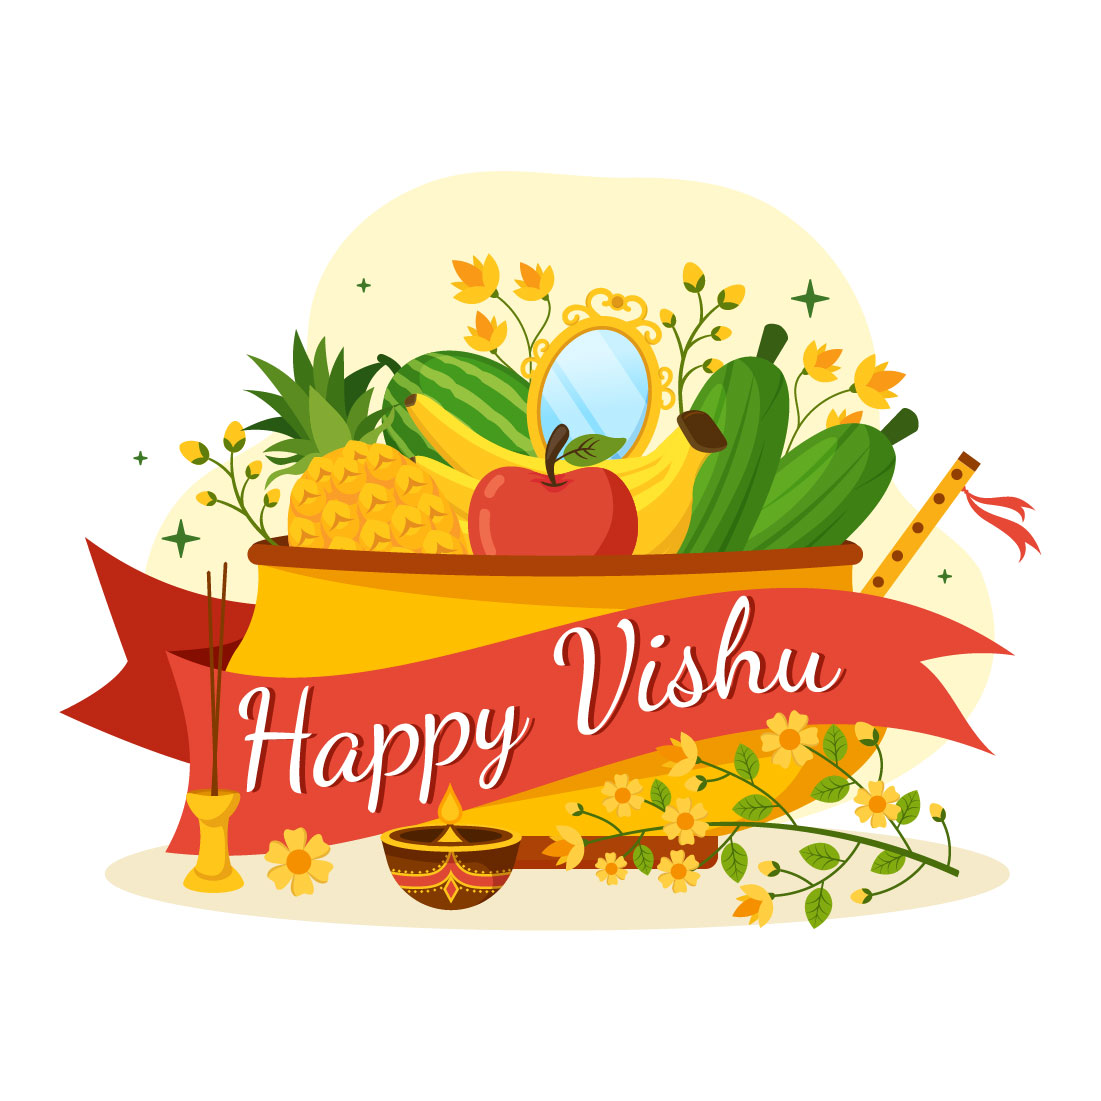 17 Happy Vishu Festival Illustration preview image.